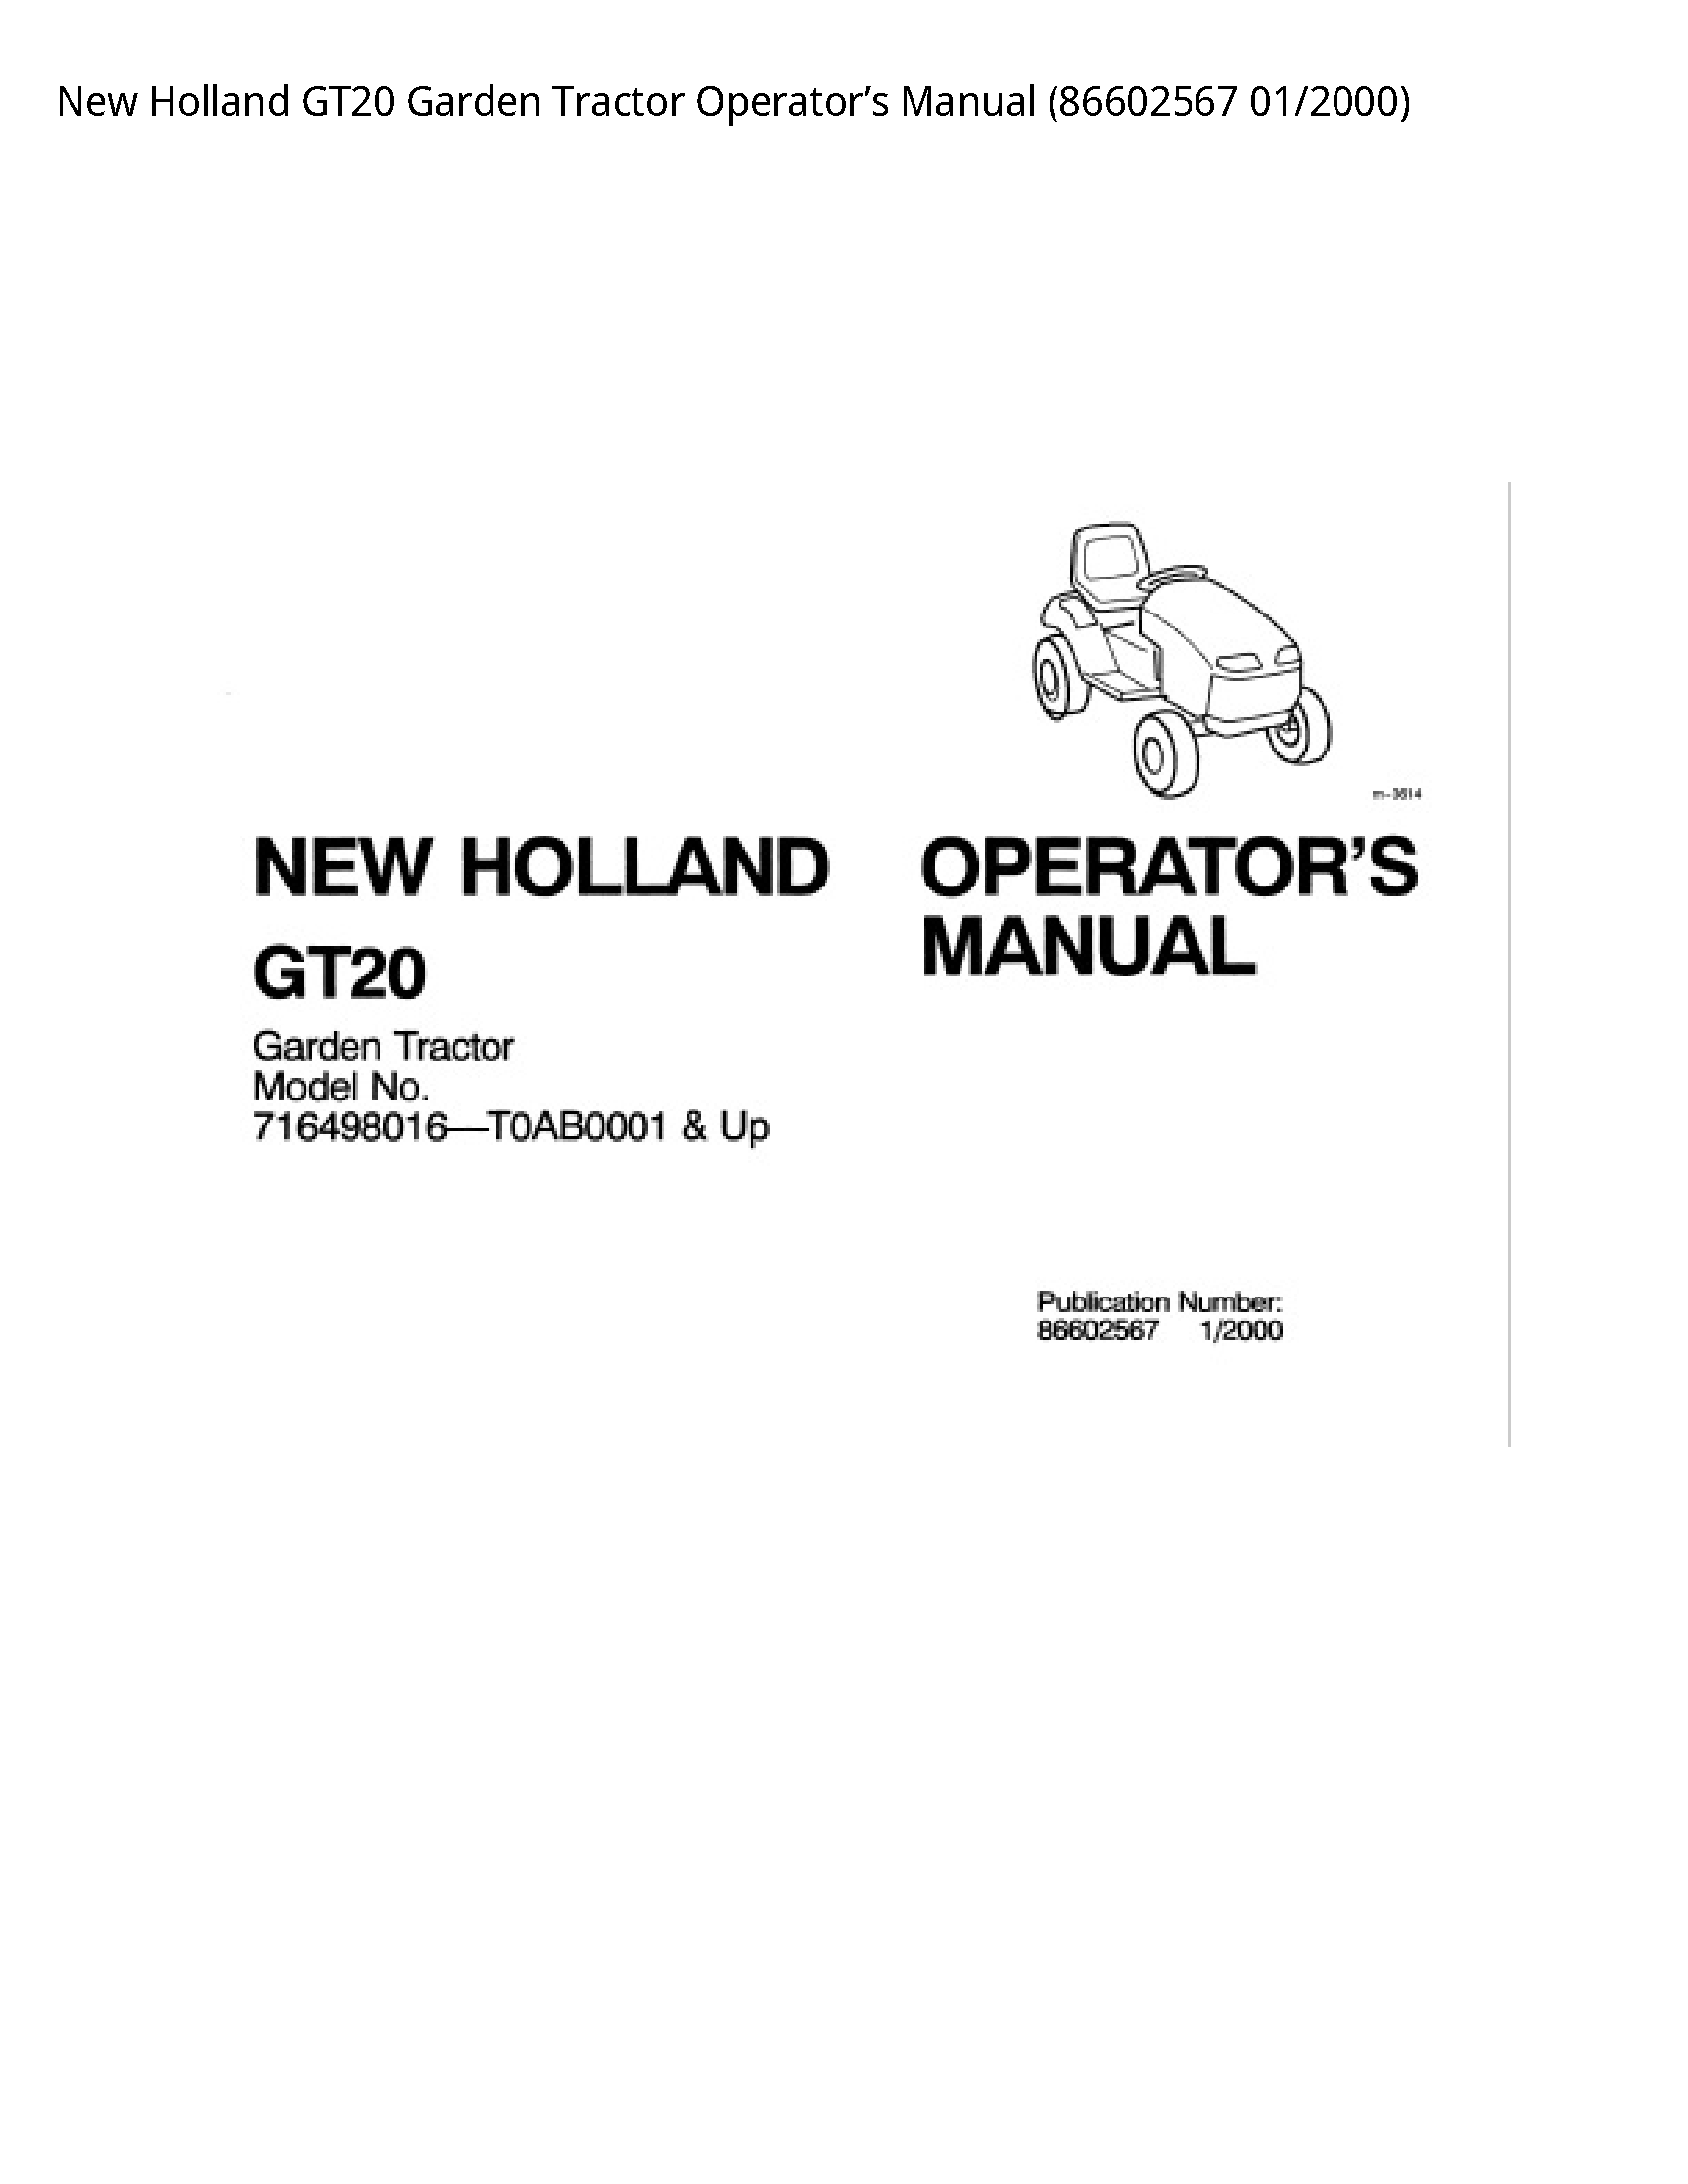 New Holland GT20 Garden Tractor Operator’s manual